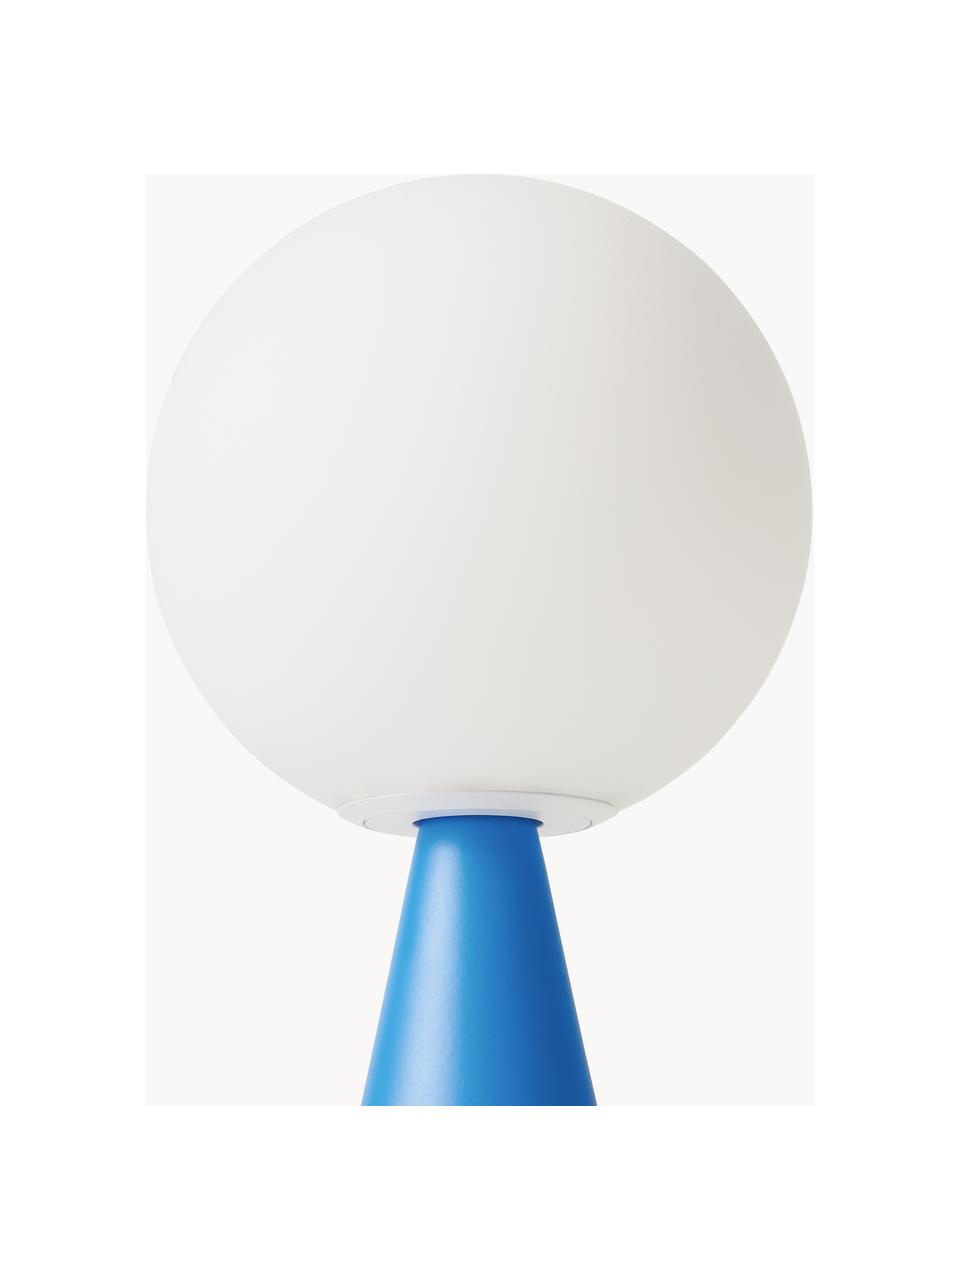 Petite lampe à poser artisanale Bilia, Blanc, bleu, Ø 12 x haut. 26 cm